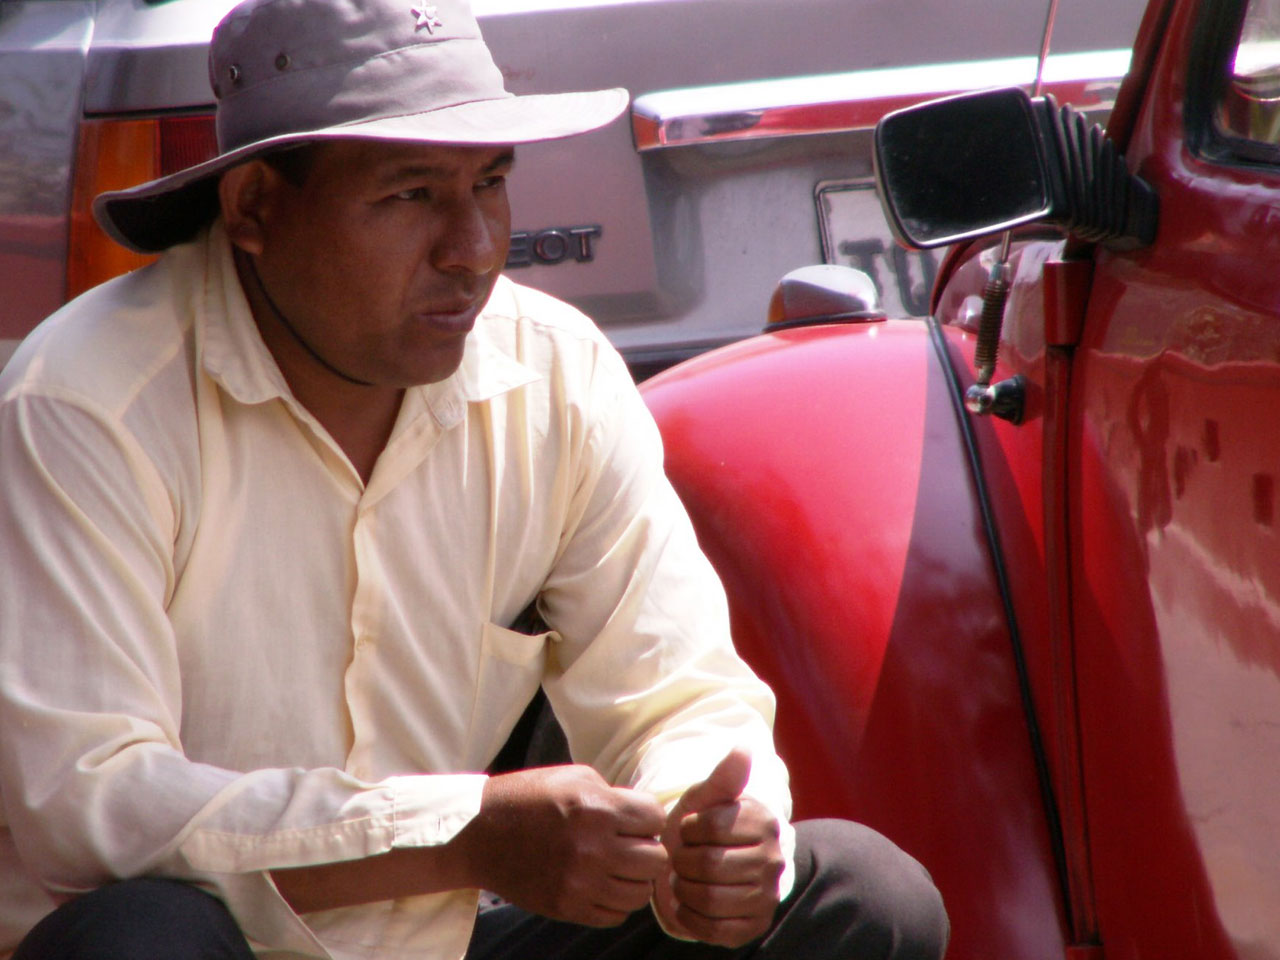 Taxi driver having a rest, Quito, Ecuador